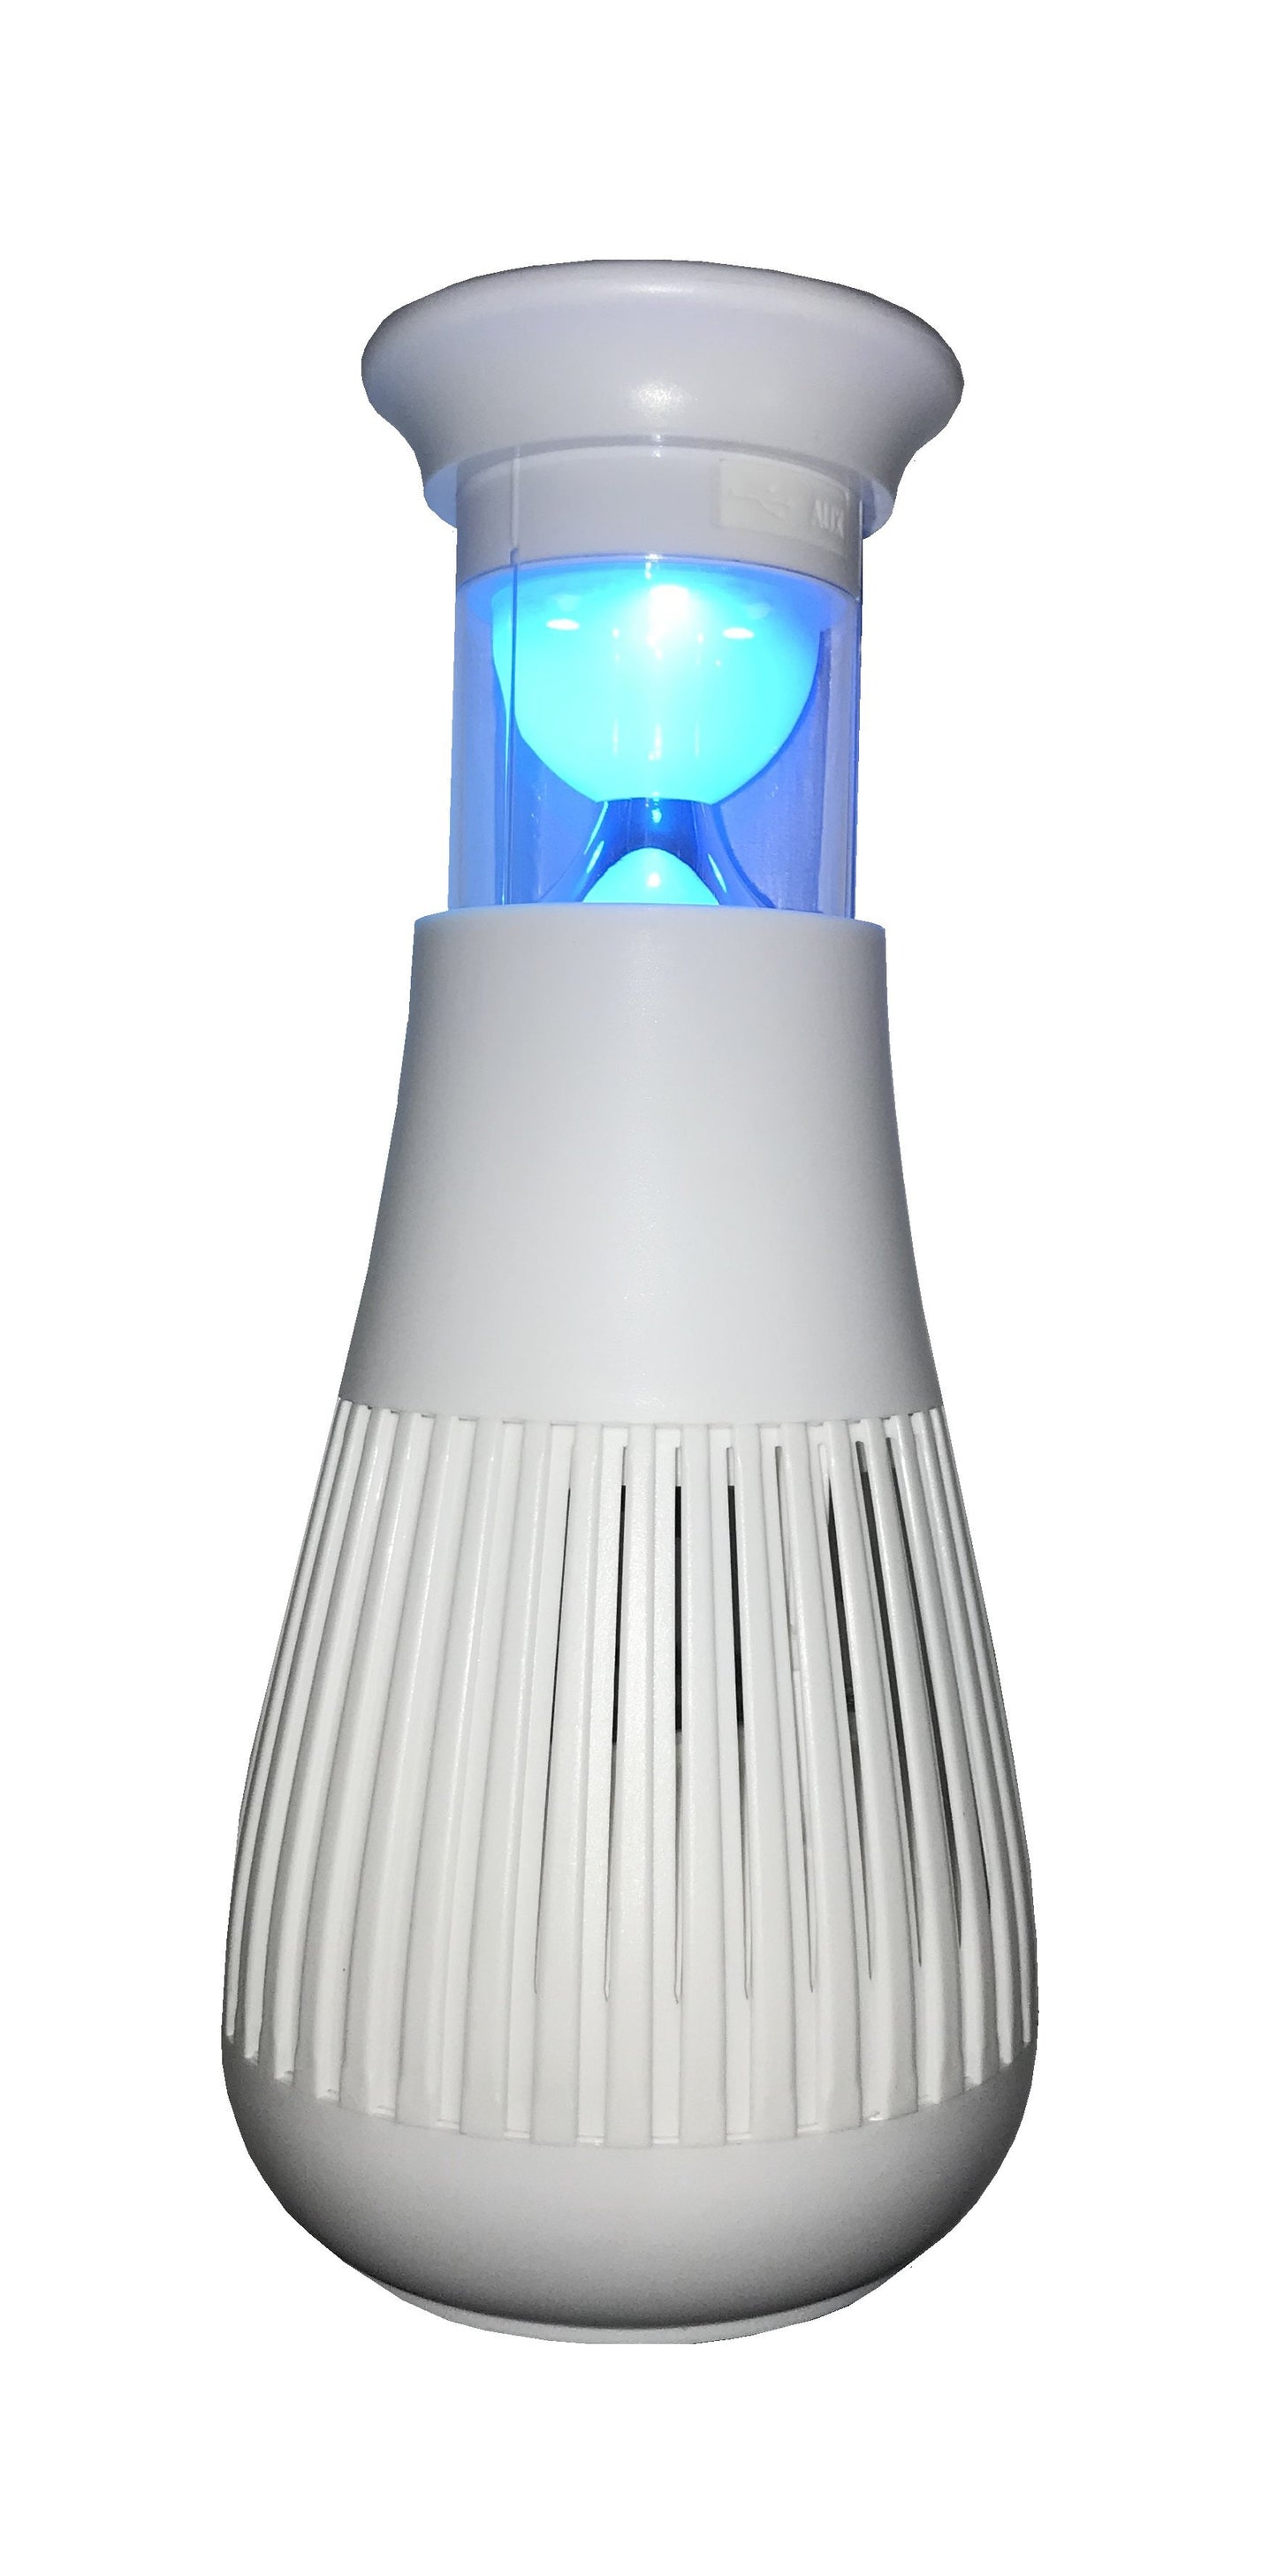 Portable Lantern with Bluetooth